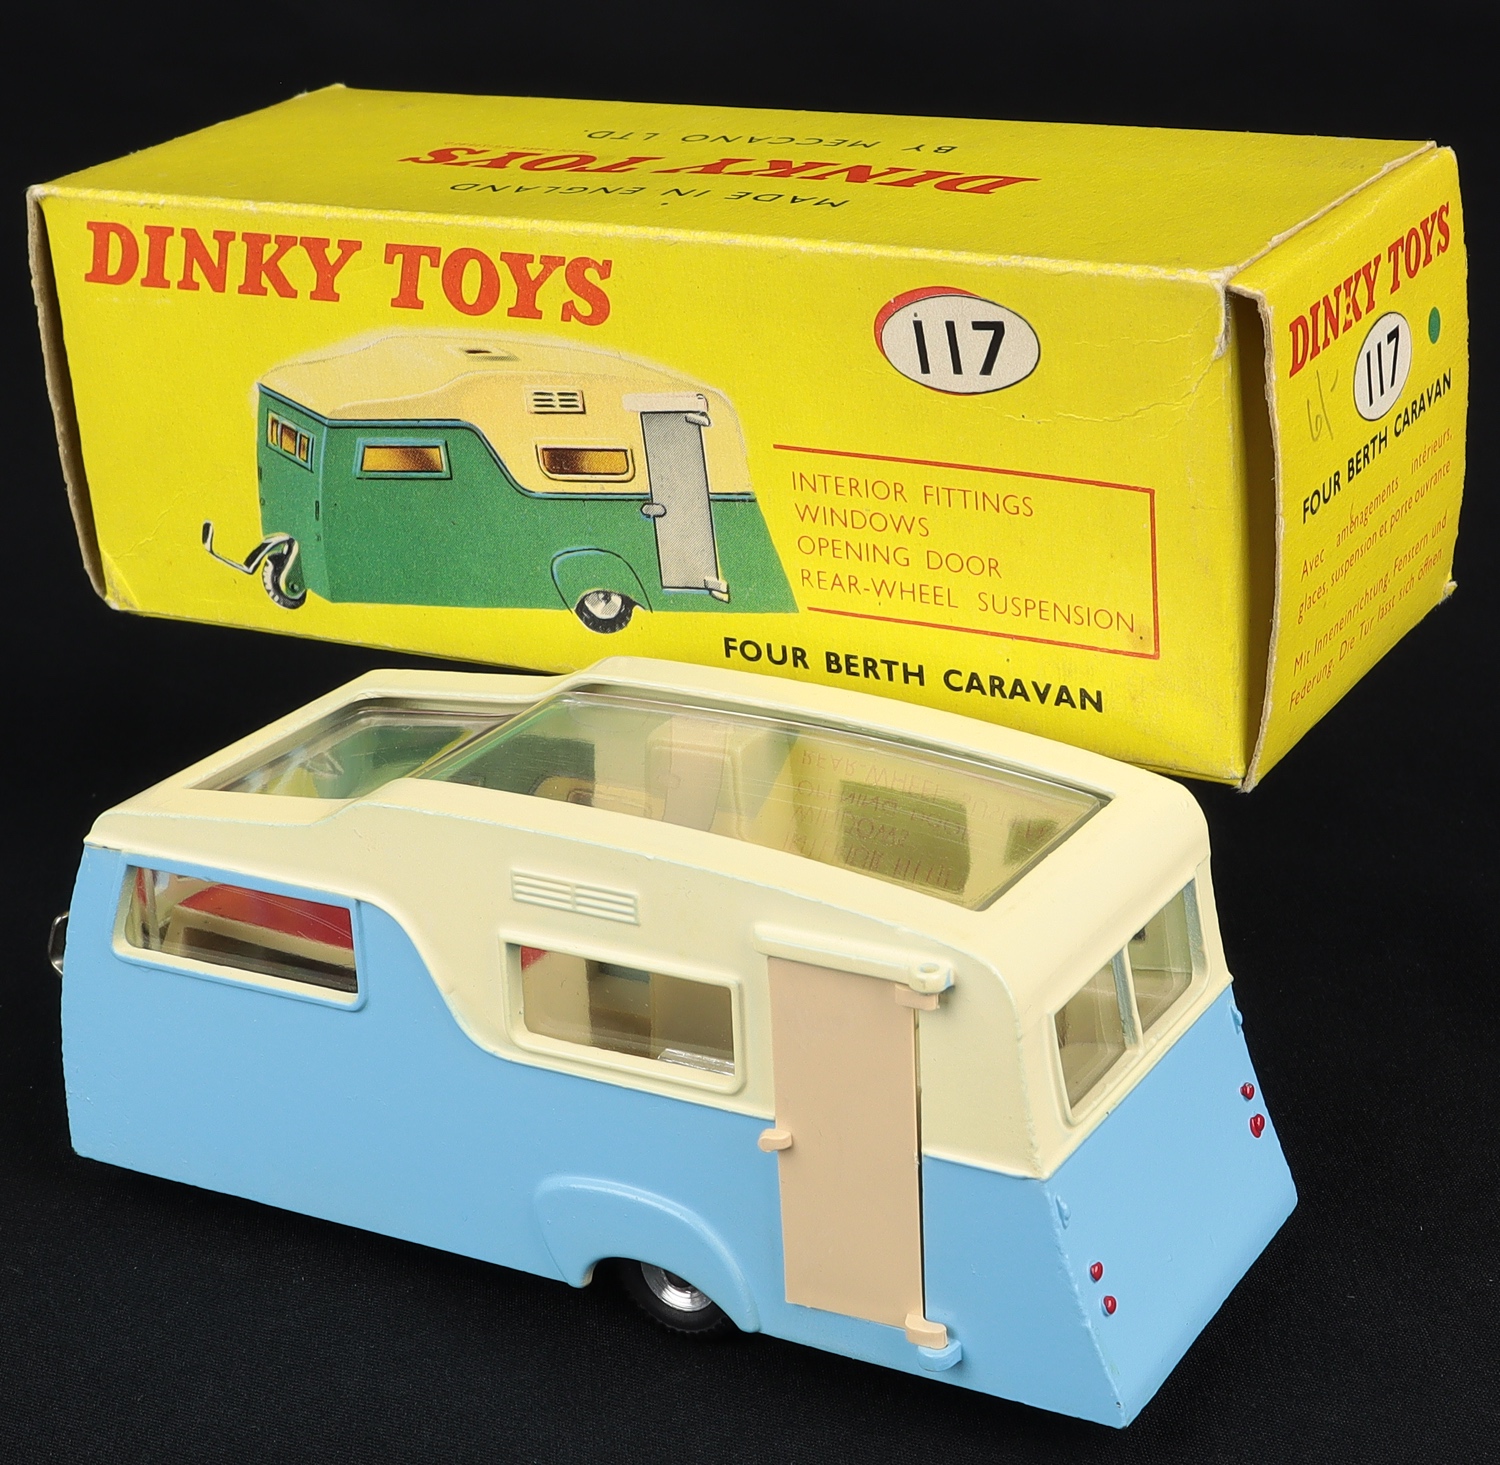 Dinky Toys 117 Four Berth Caravan - QDT